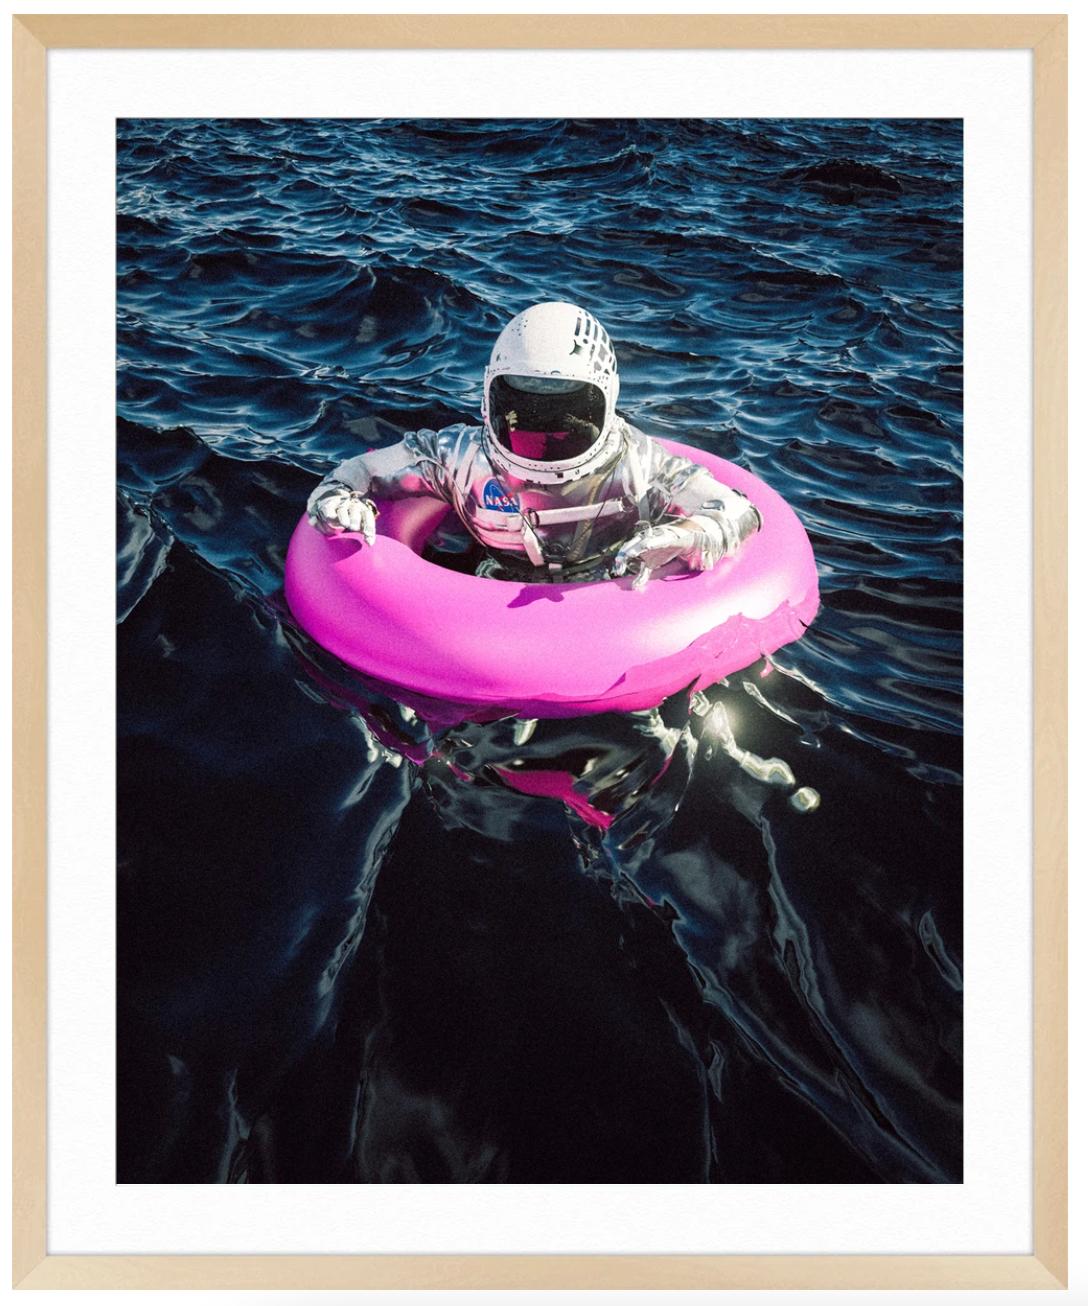 Astro Lost at Sea - Black Figurative Photograph by Cameron Burns